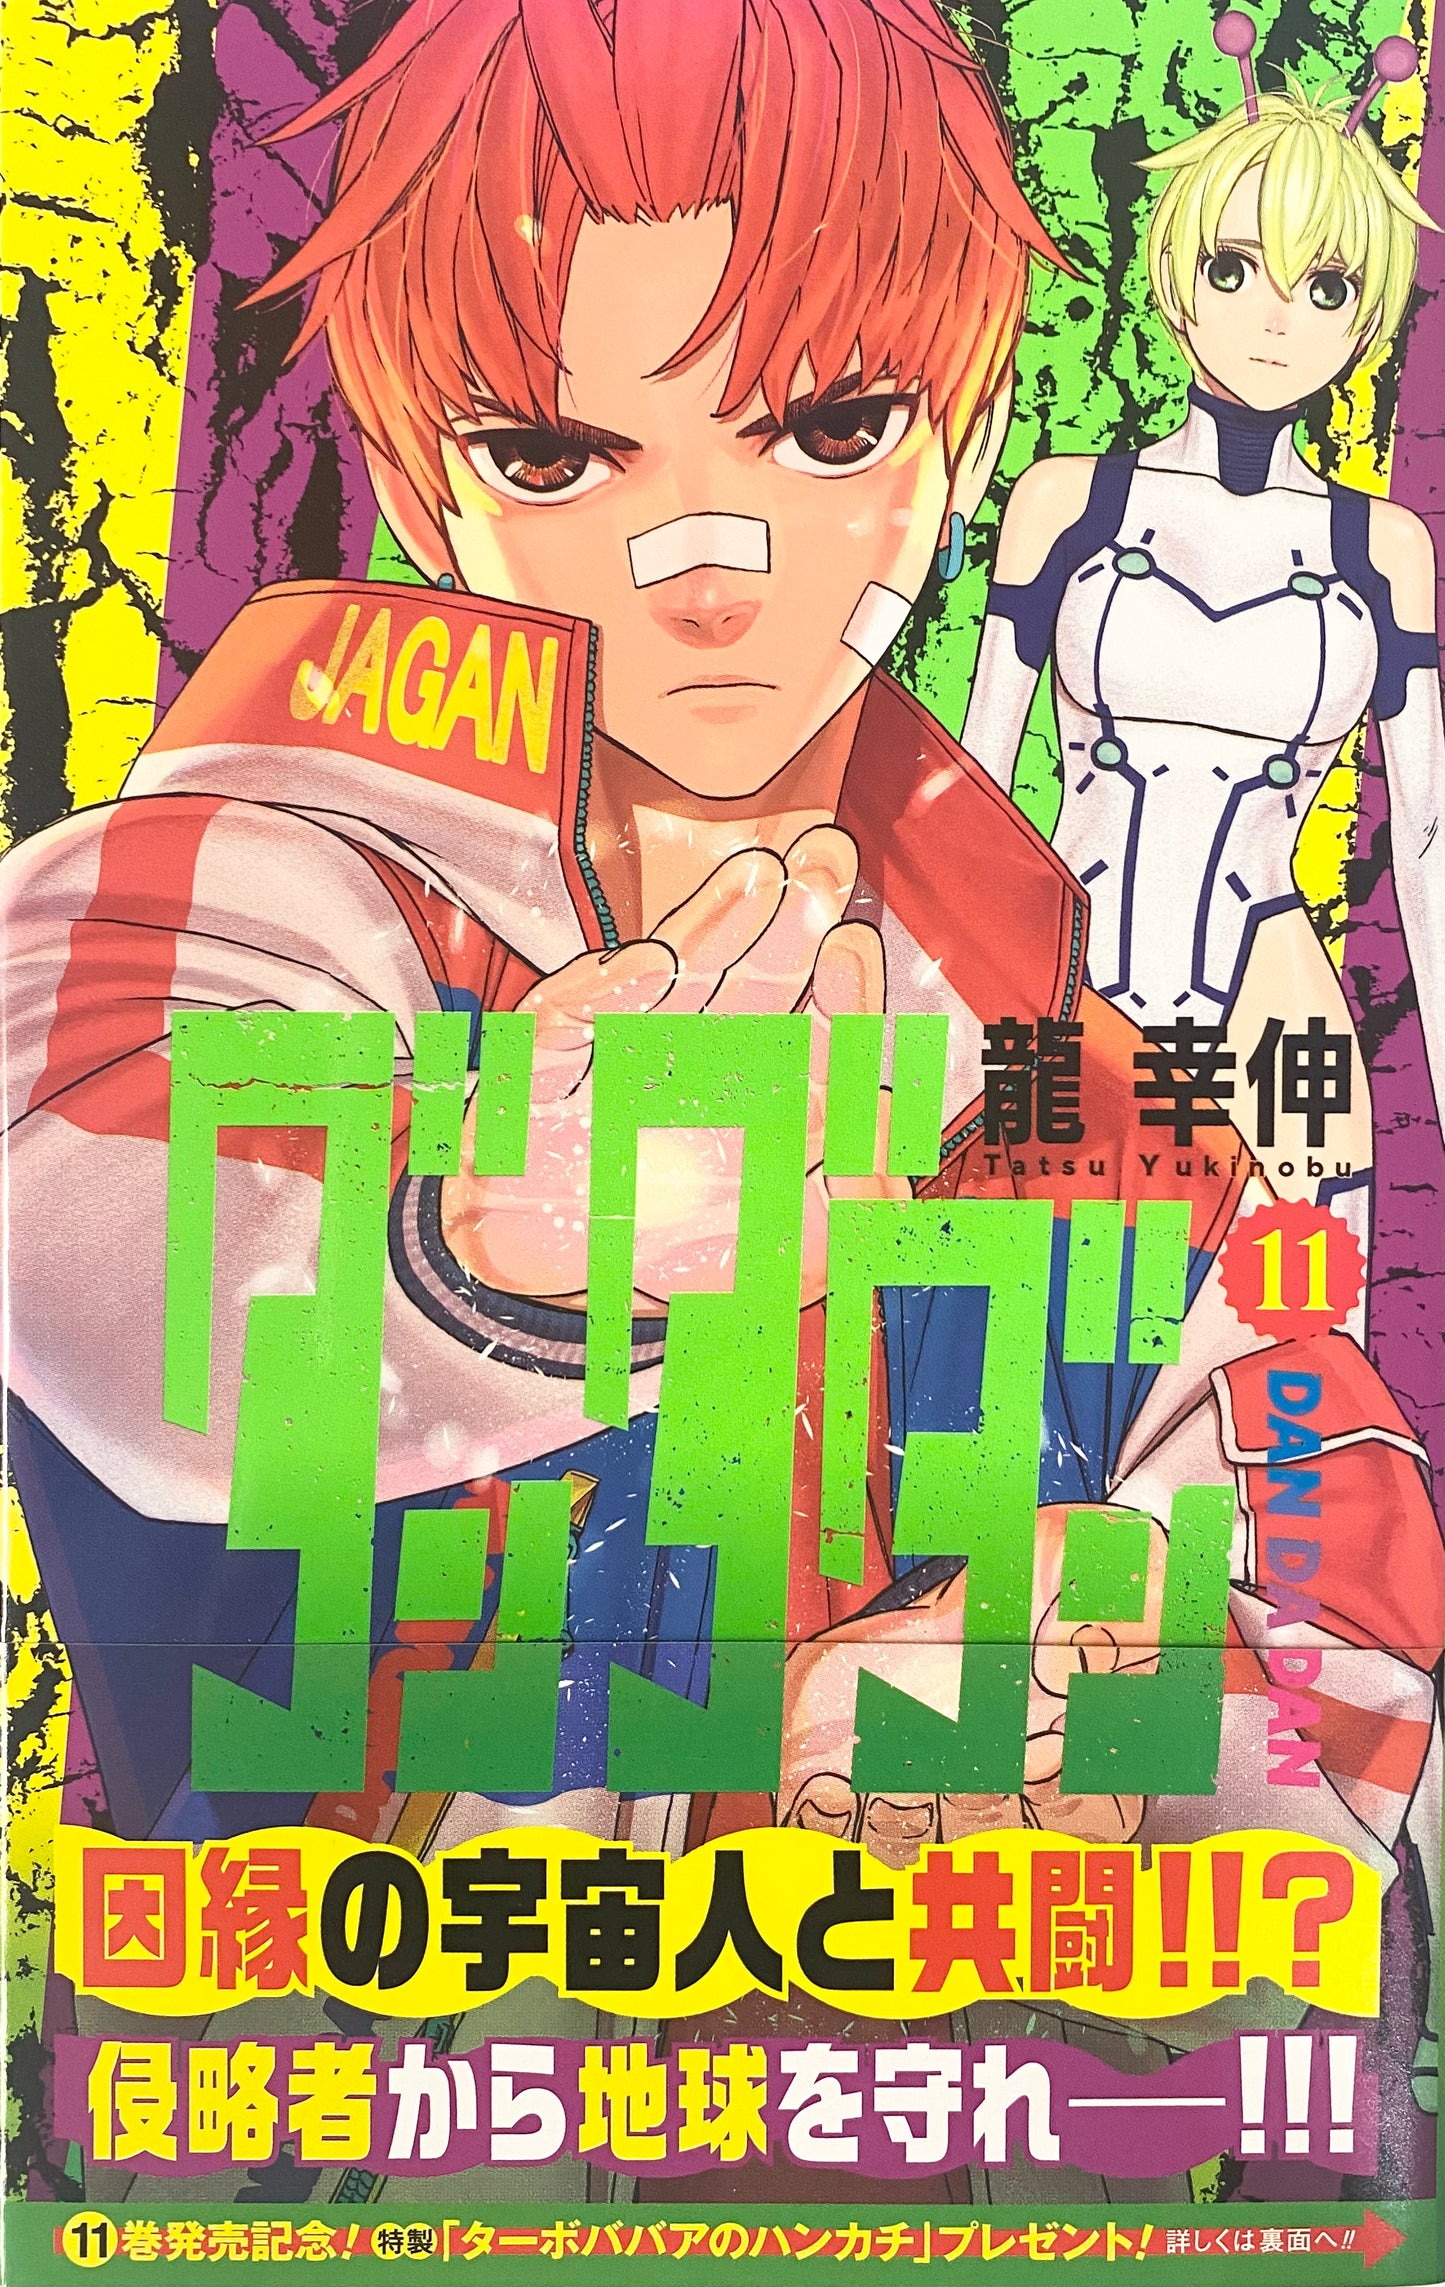 DanDaDan Vol.11-Official Japanese Edition